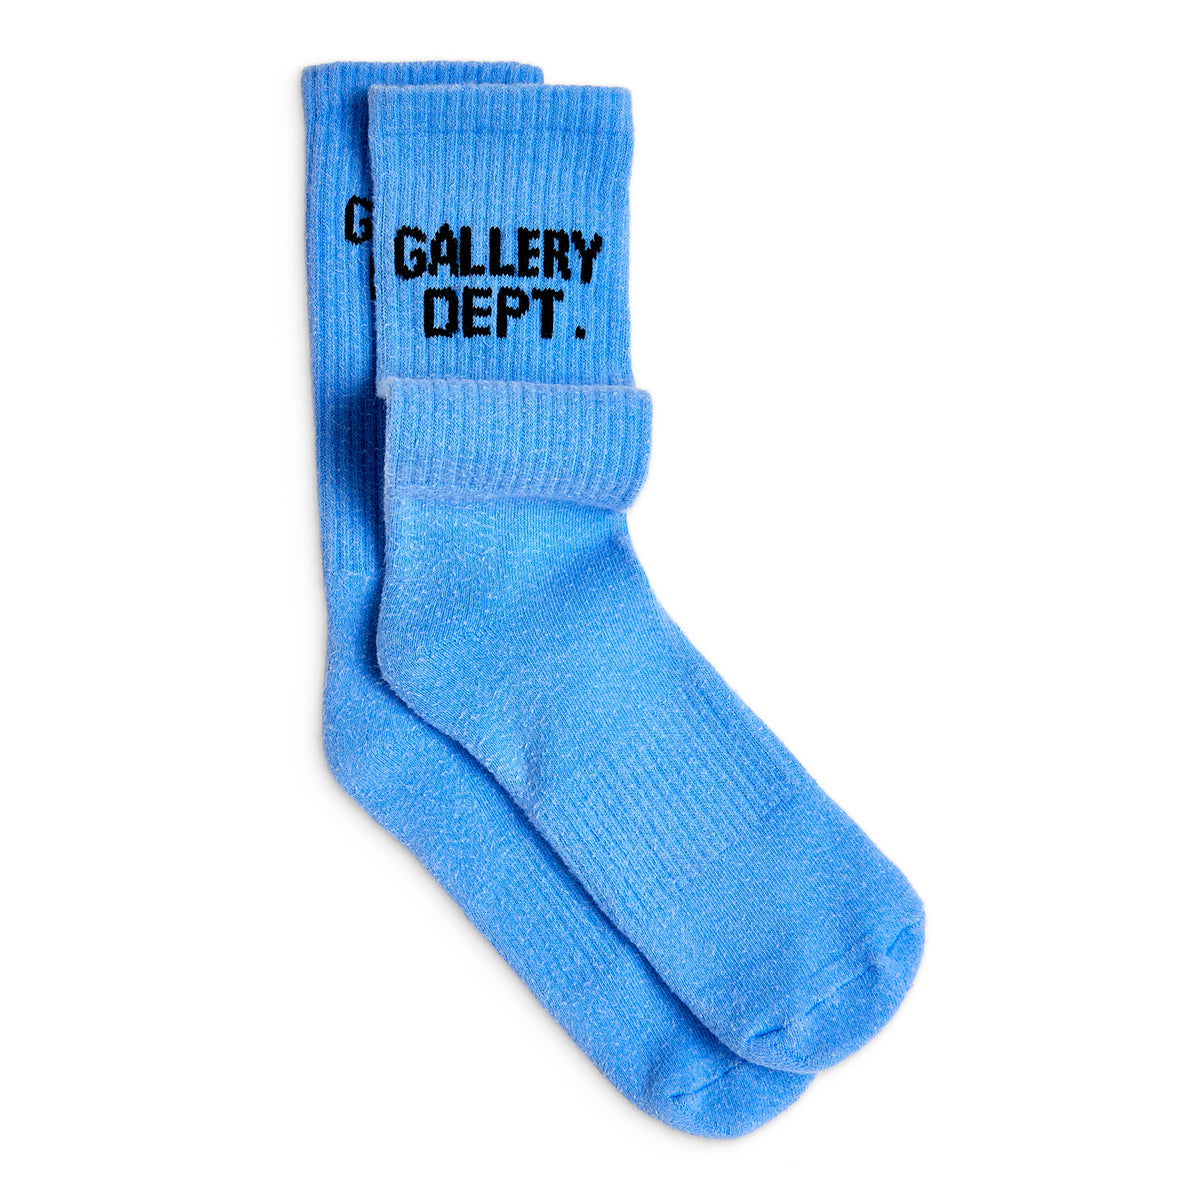 CLEAN YELLOW SOCKS – Gallery Dept - online